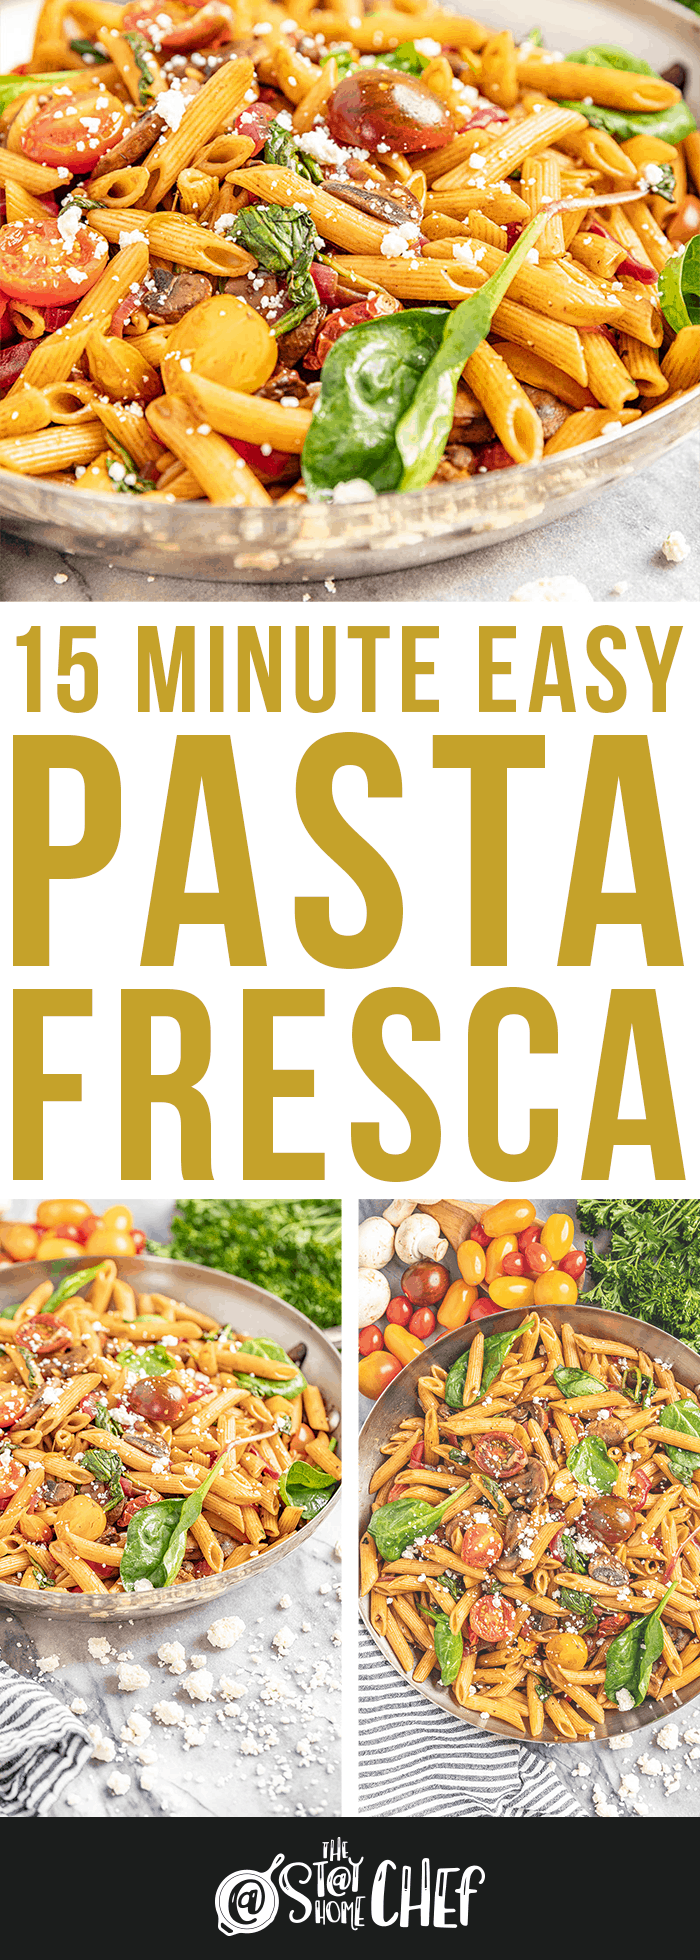 15 Minute Easy Pasta Fresca